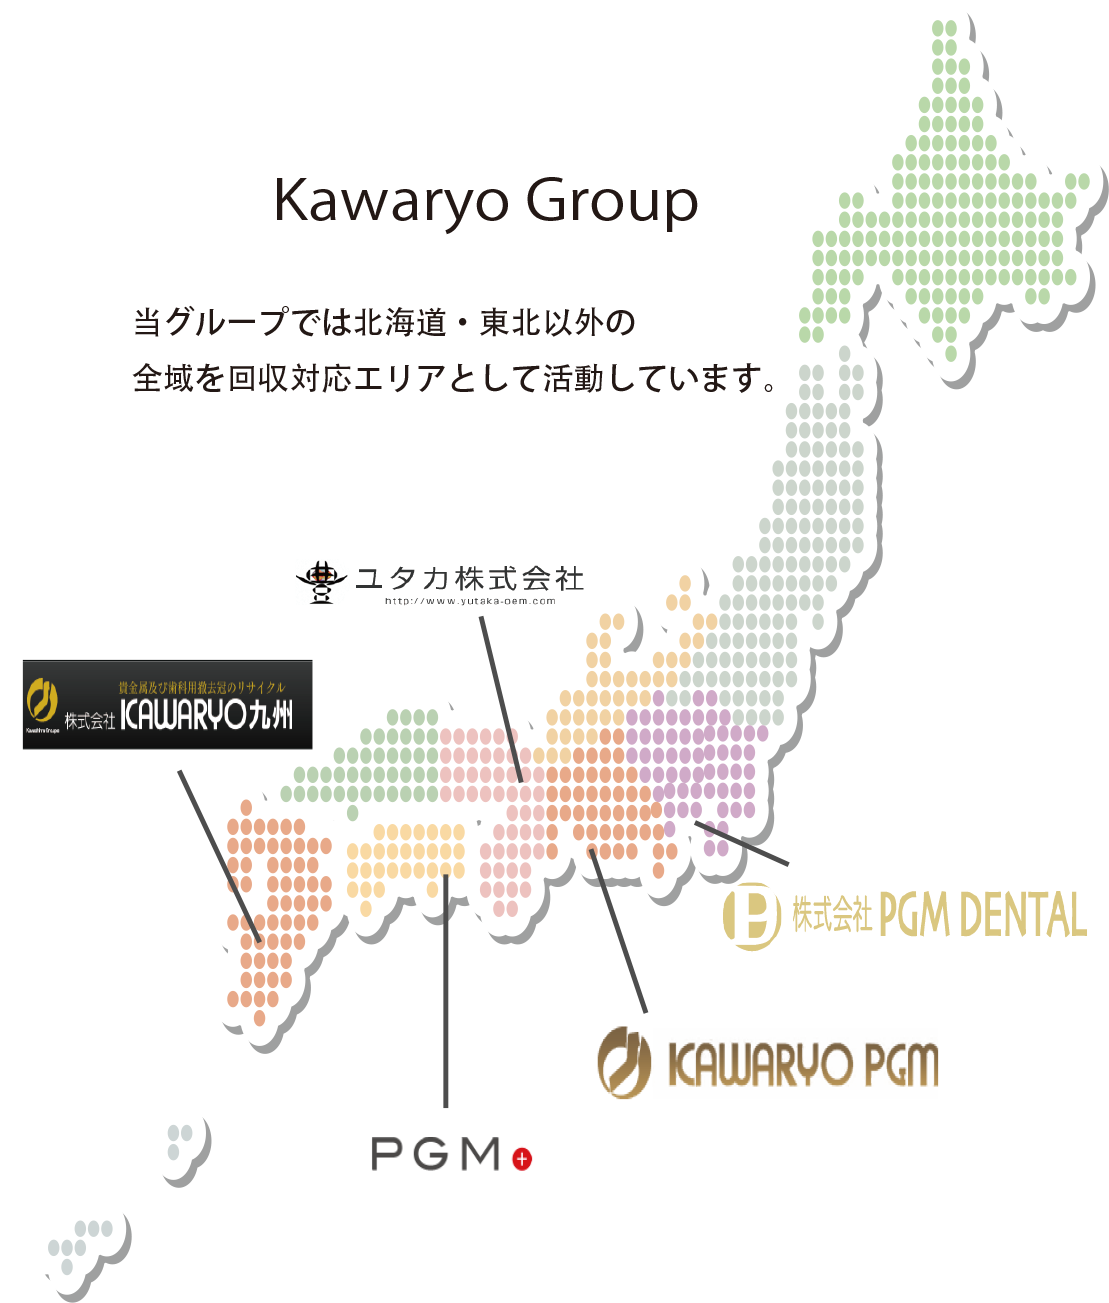 Kawaryo Group 当グループでは北海道·東北以外の全域を回収対応エリアとして活動しています。